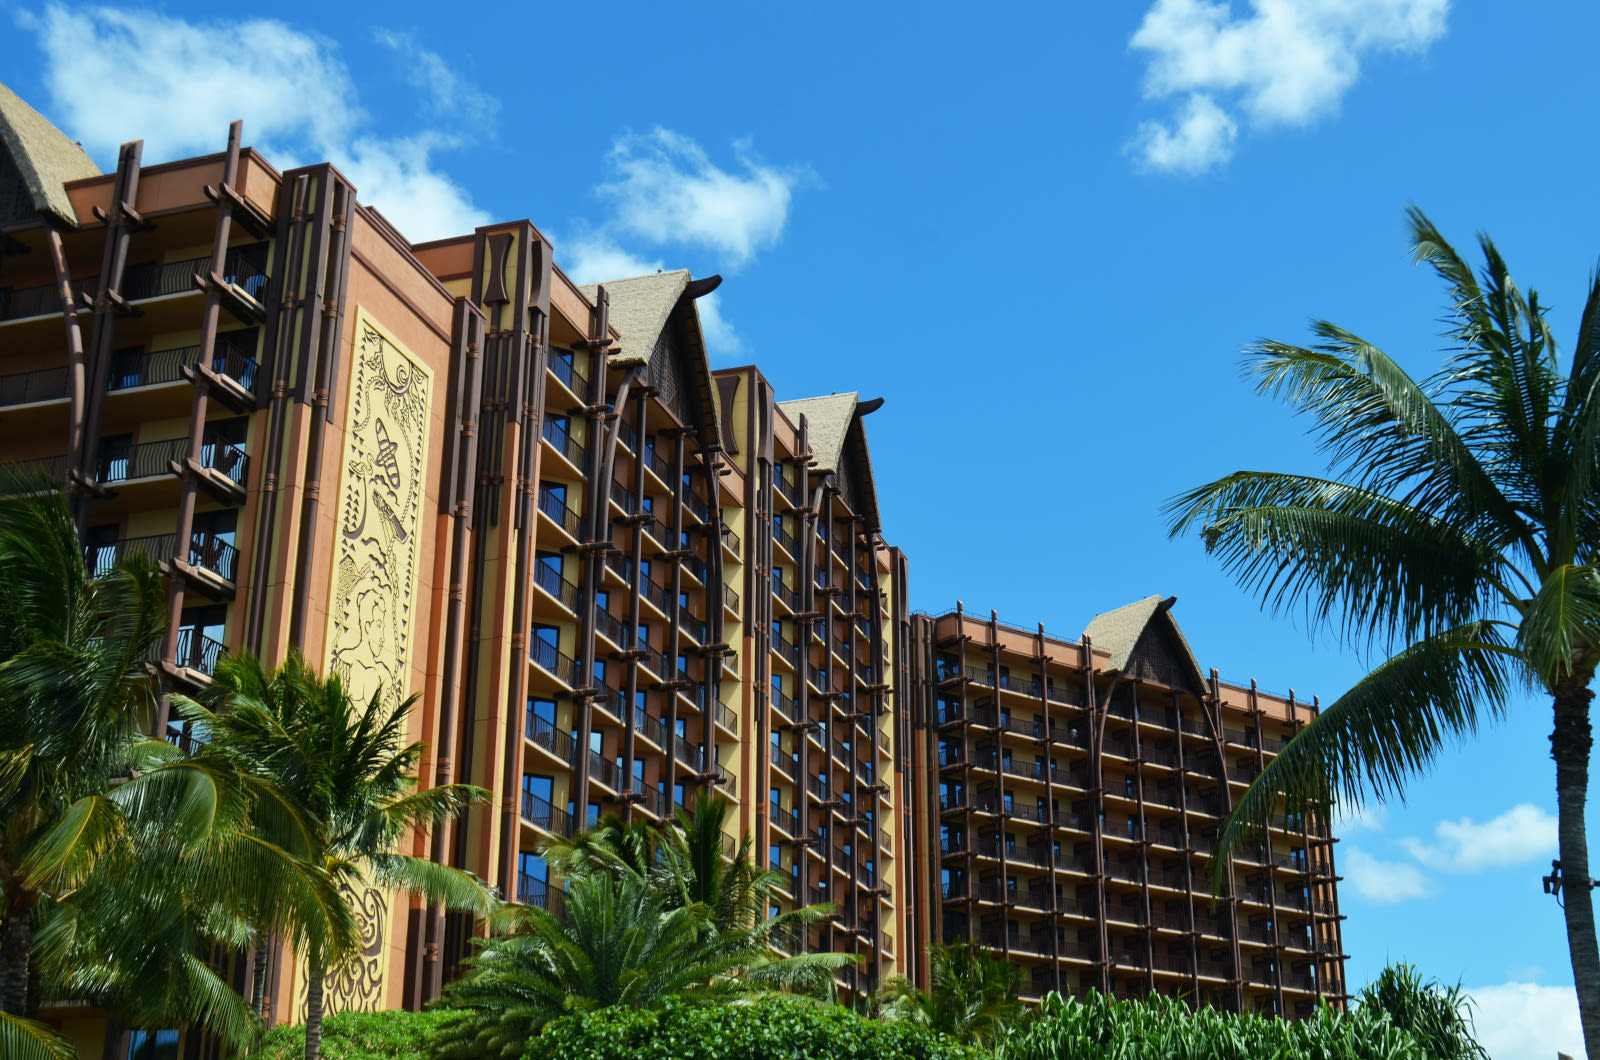 Luxurious Hotel in Hawaii